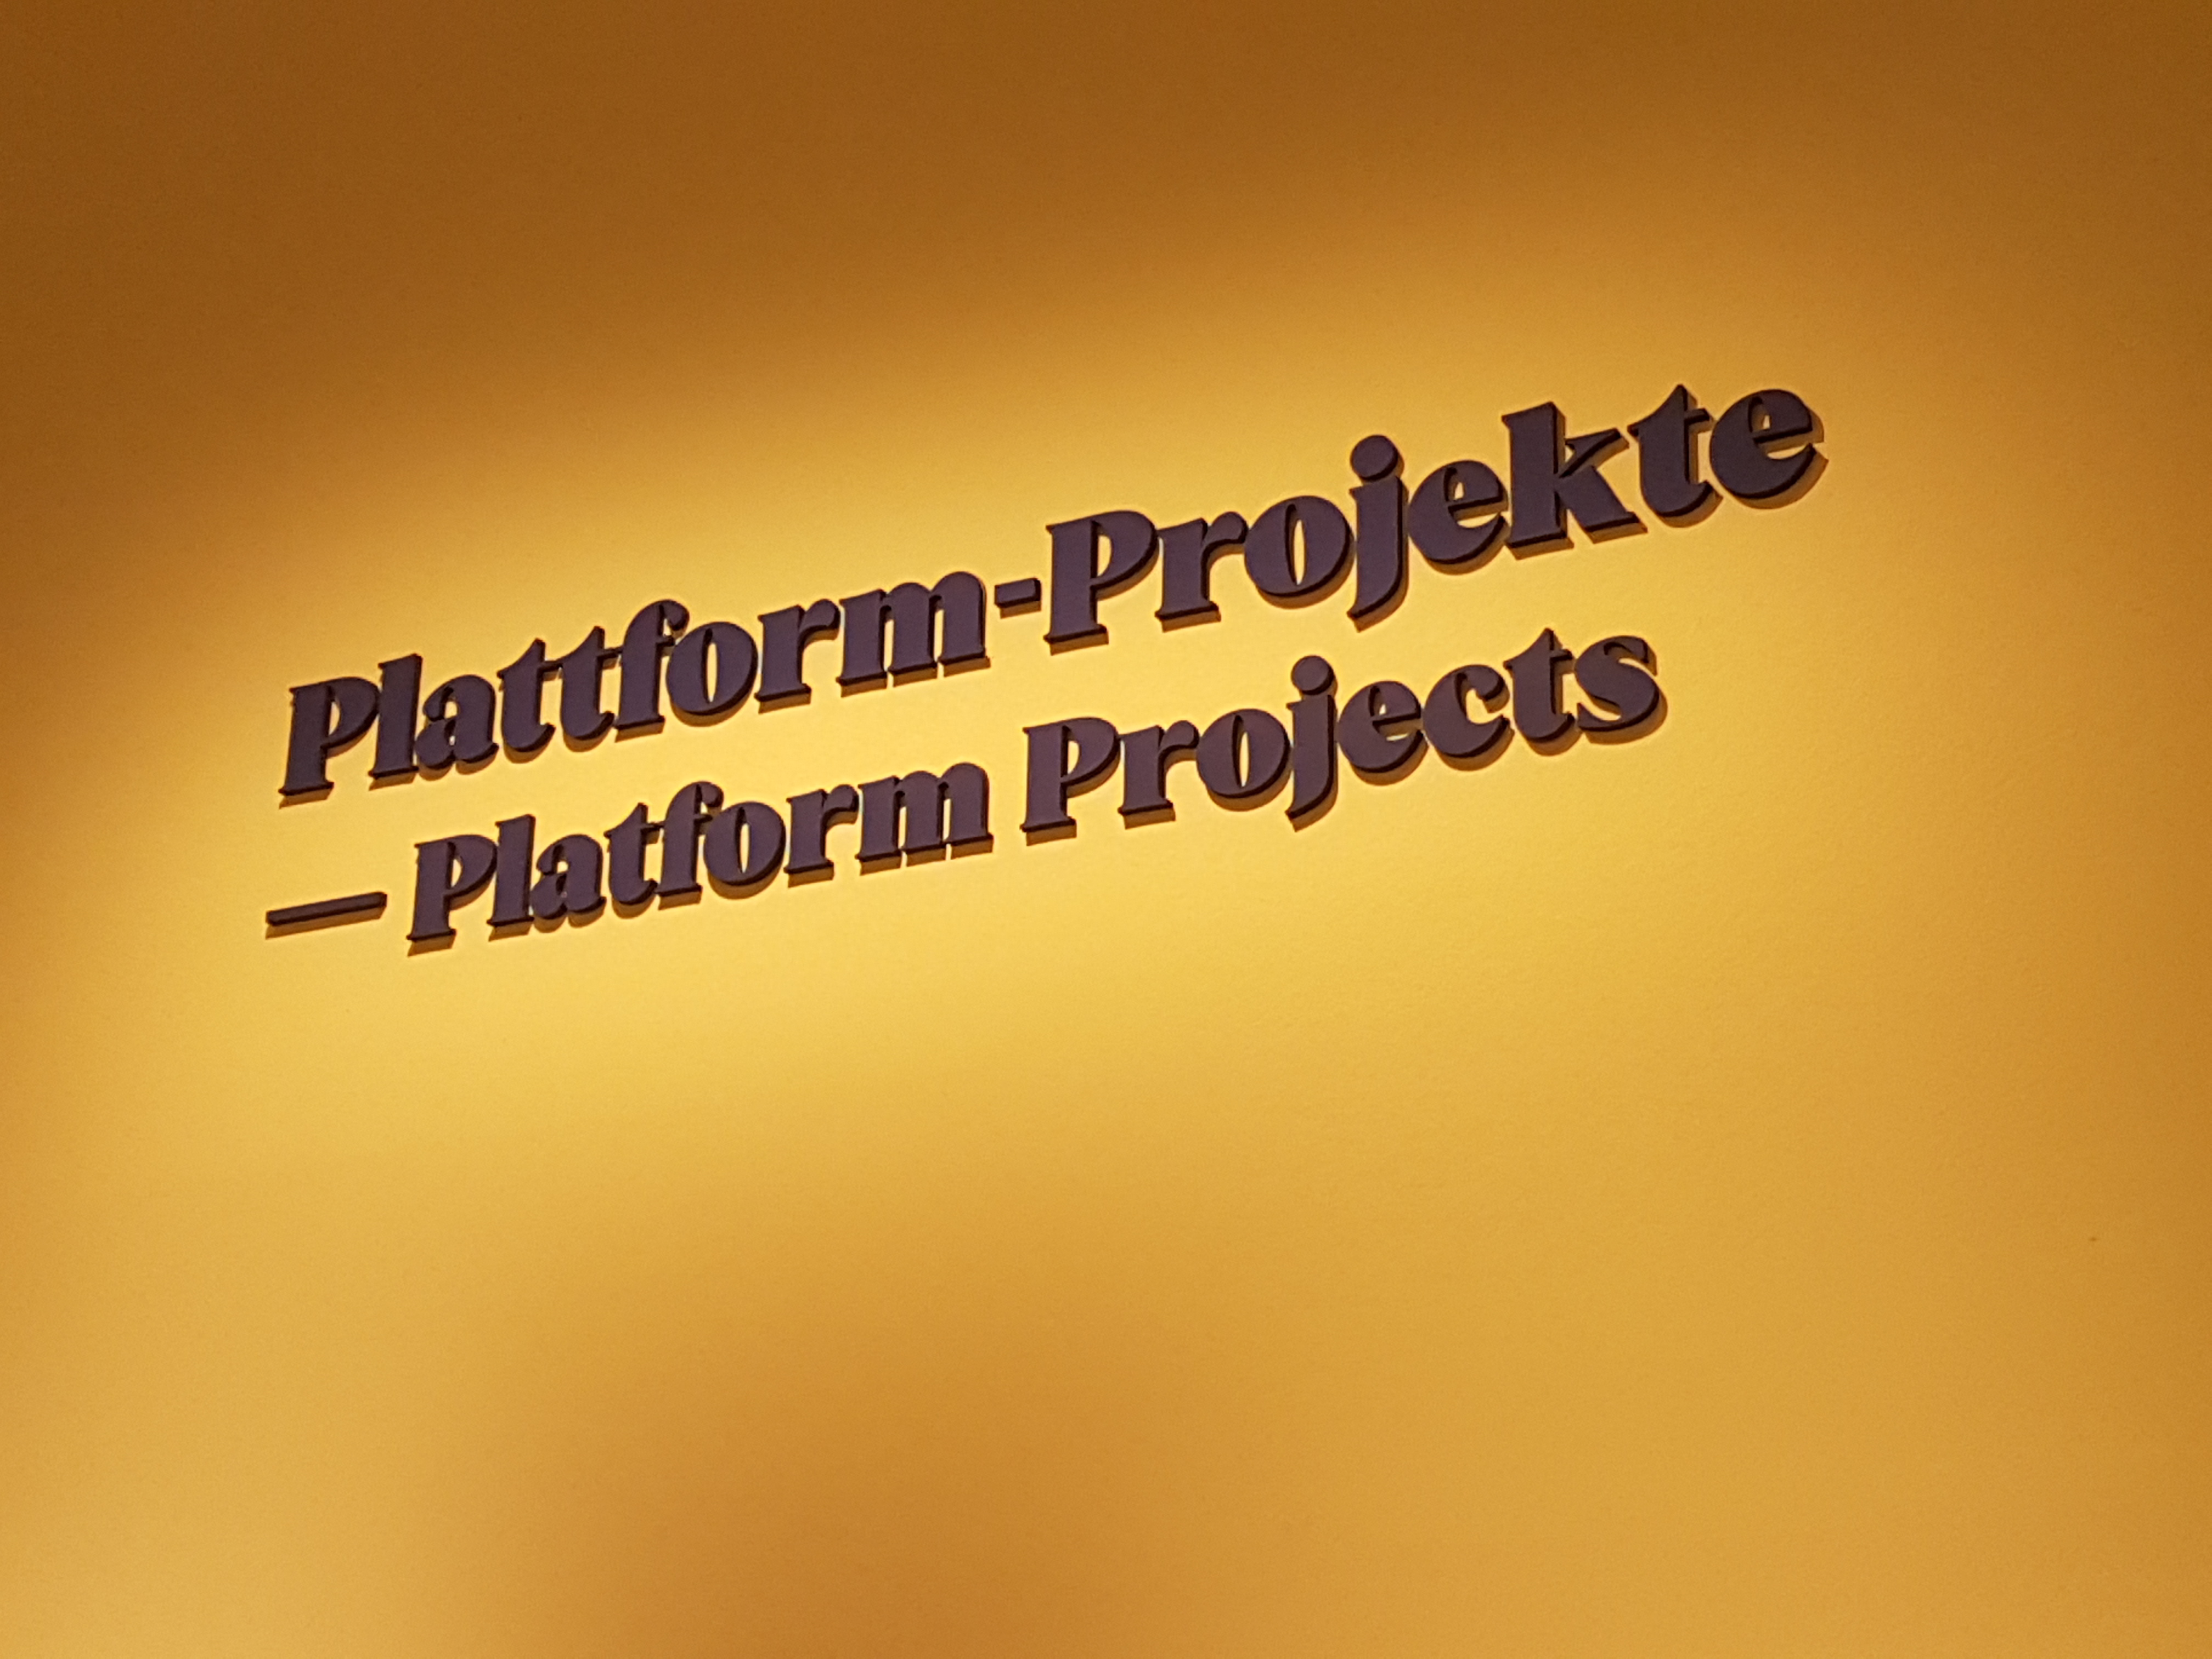 Plattform-Projekte